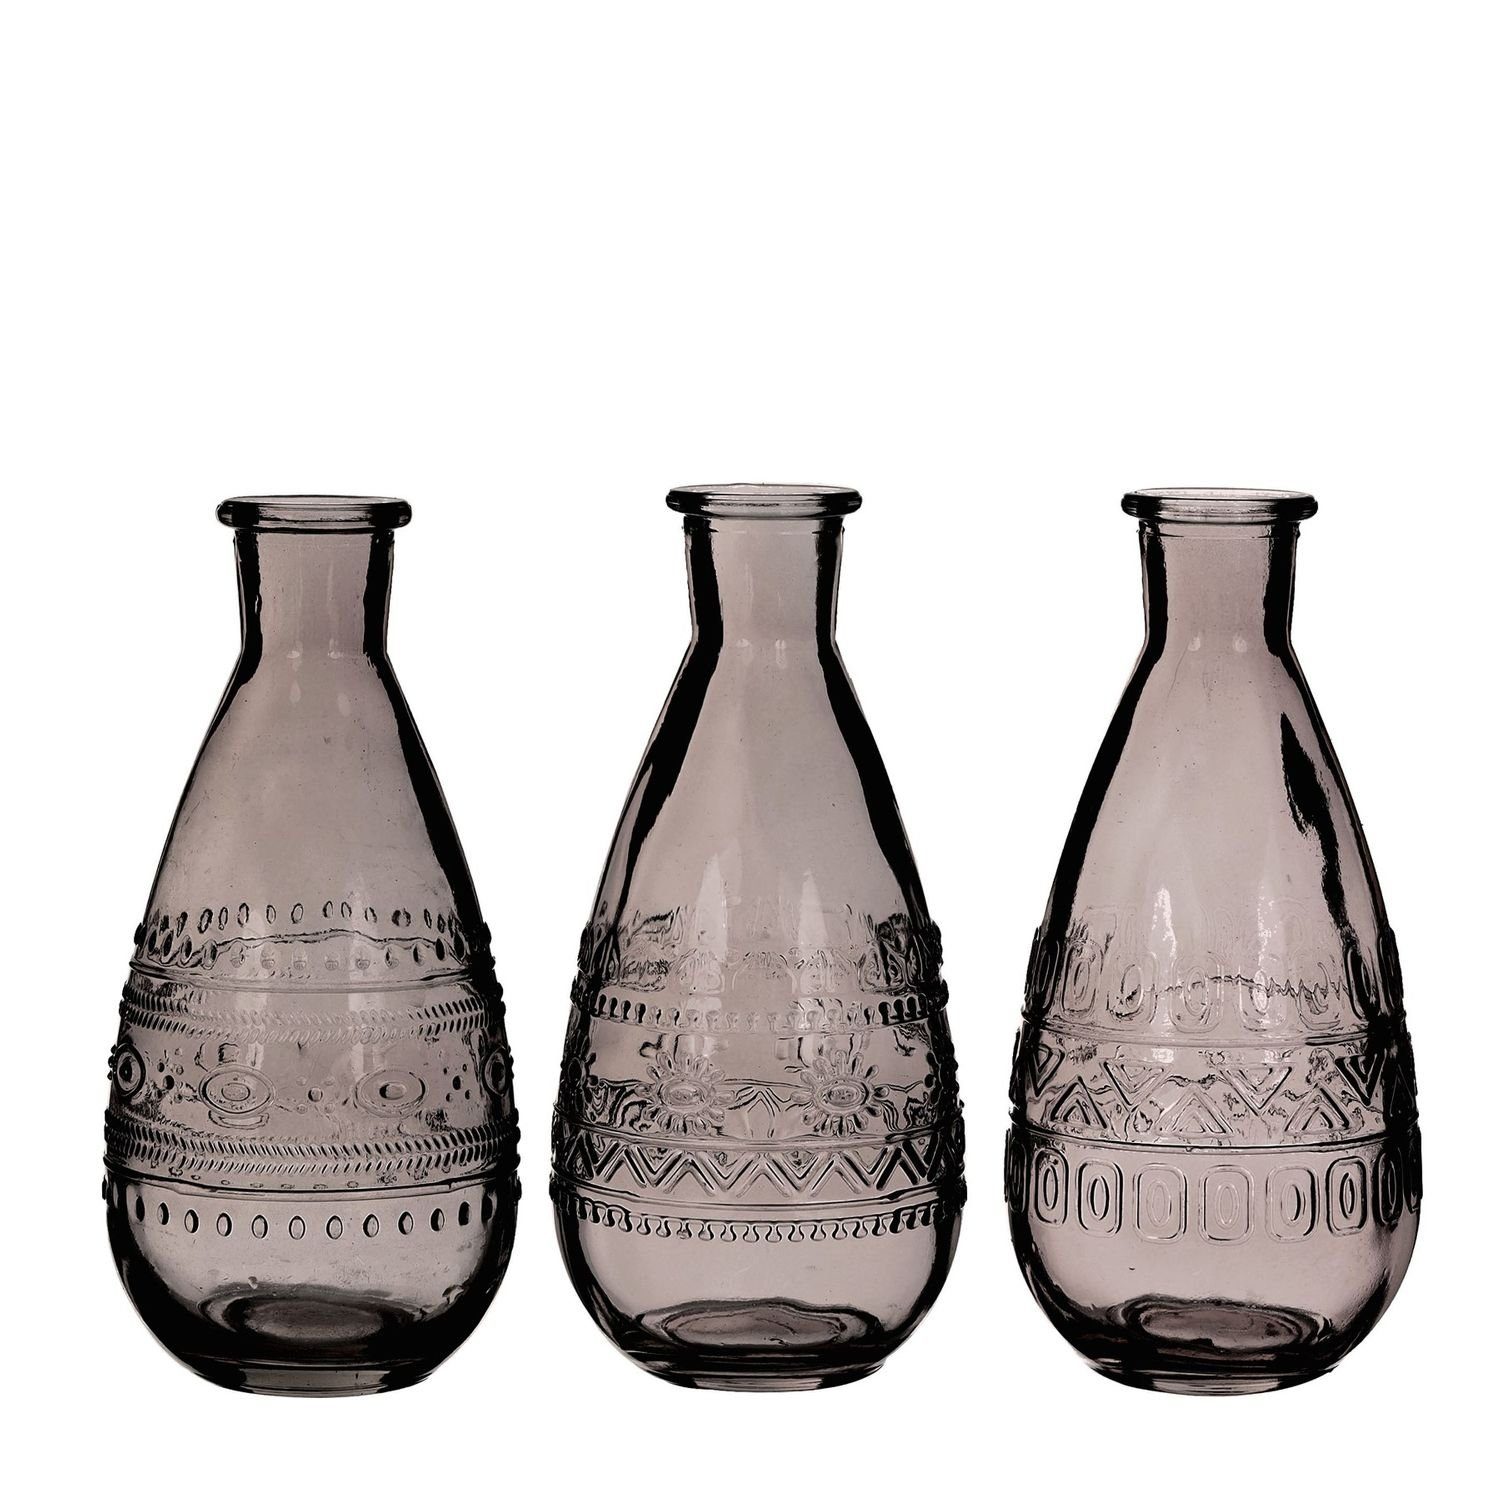 NaDeco Dekovase Glas Flasche cm Rome cm in Grau h. 15,8 Ø 7,5